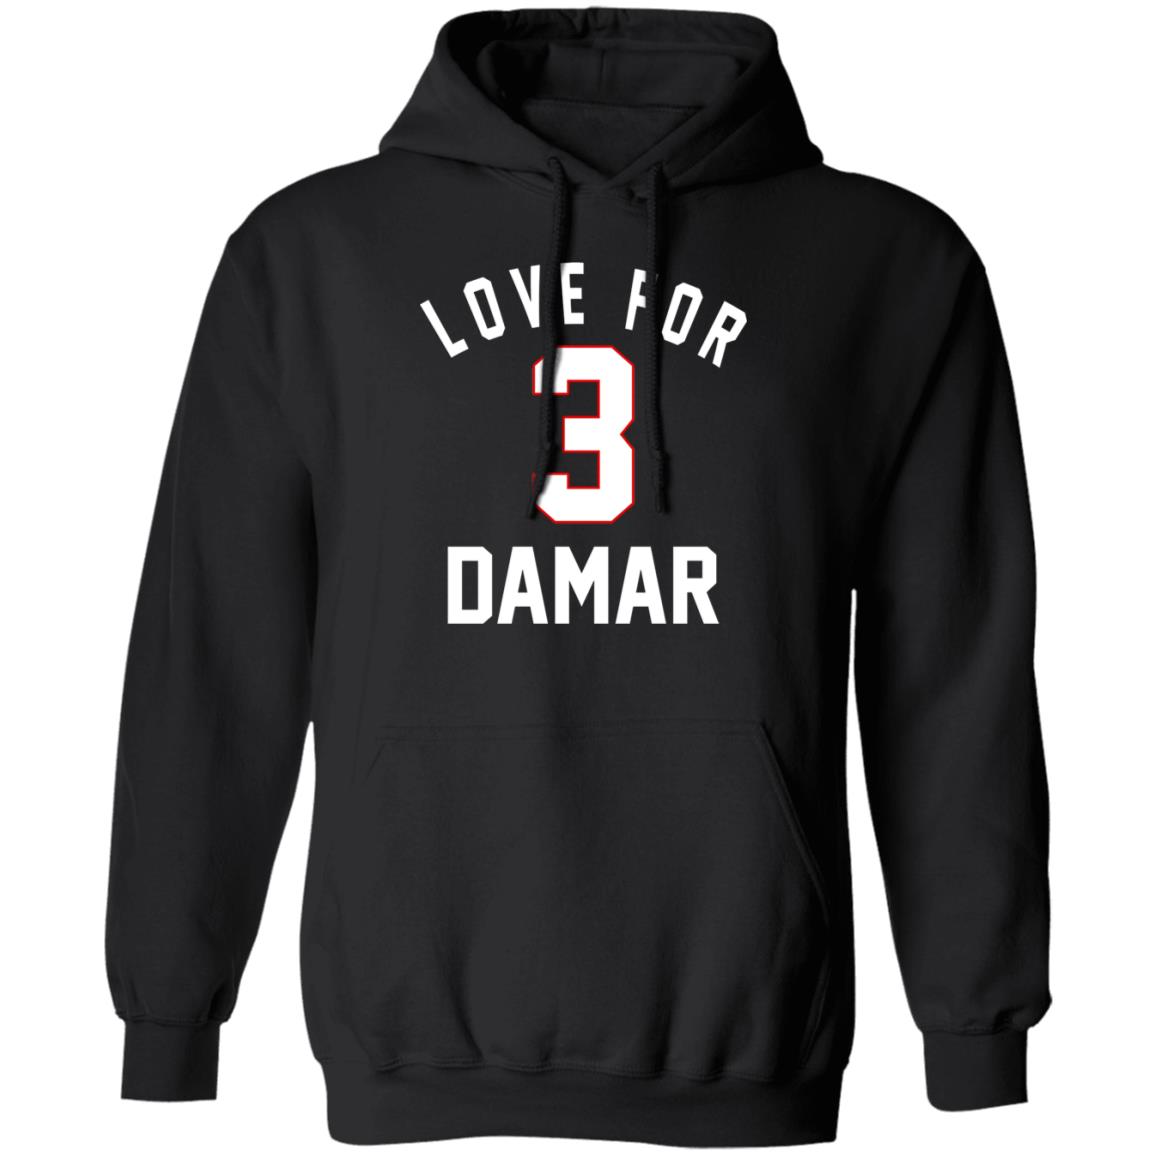 Love For Damar 3 Hoodie